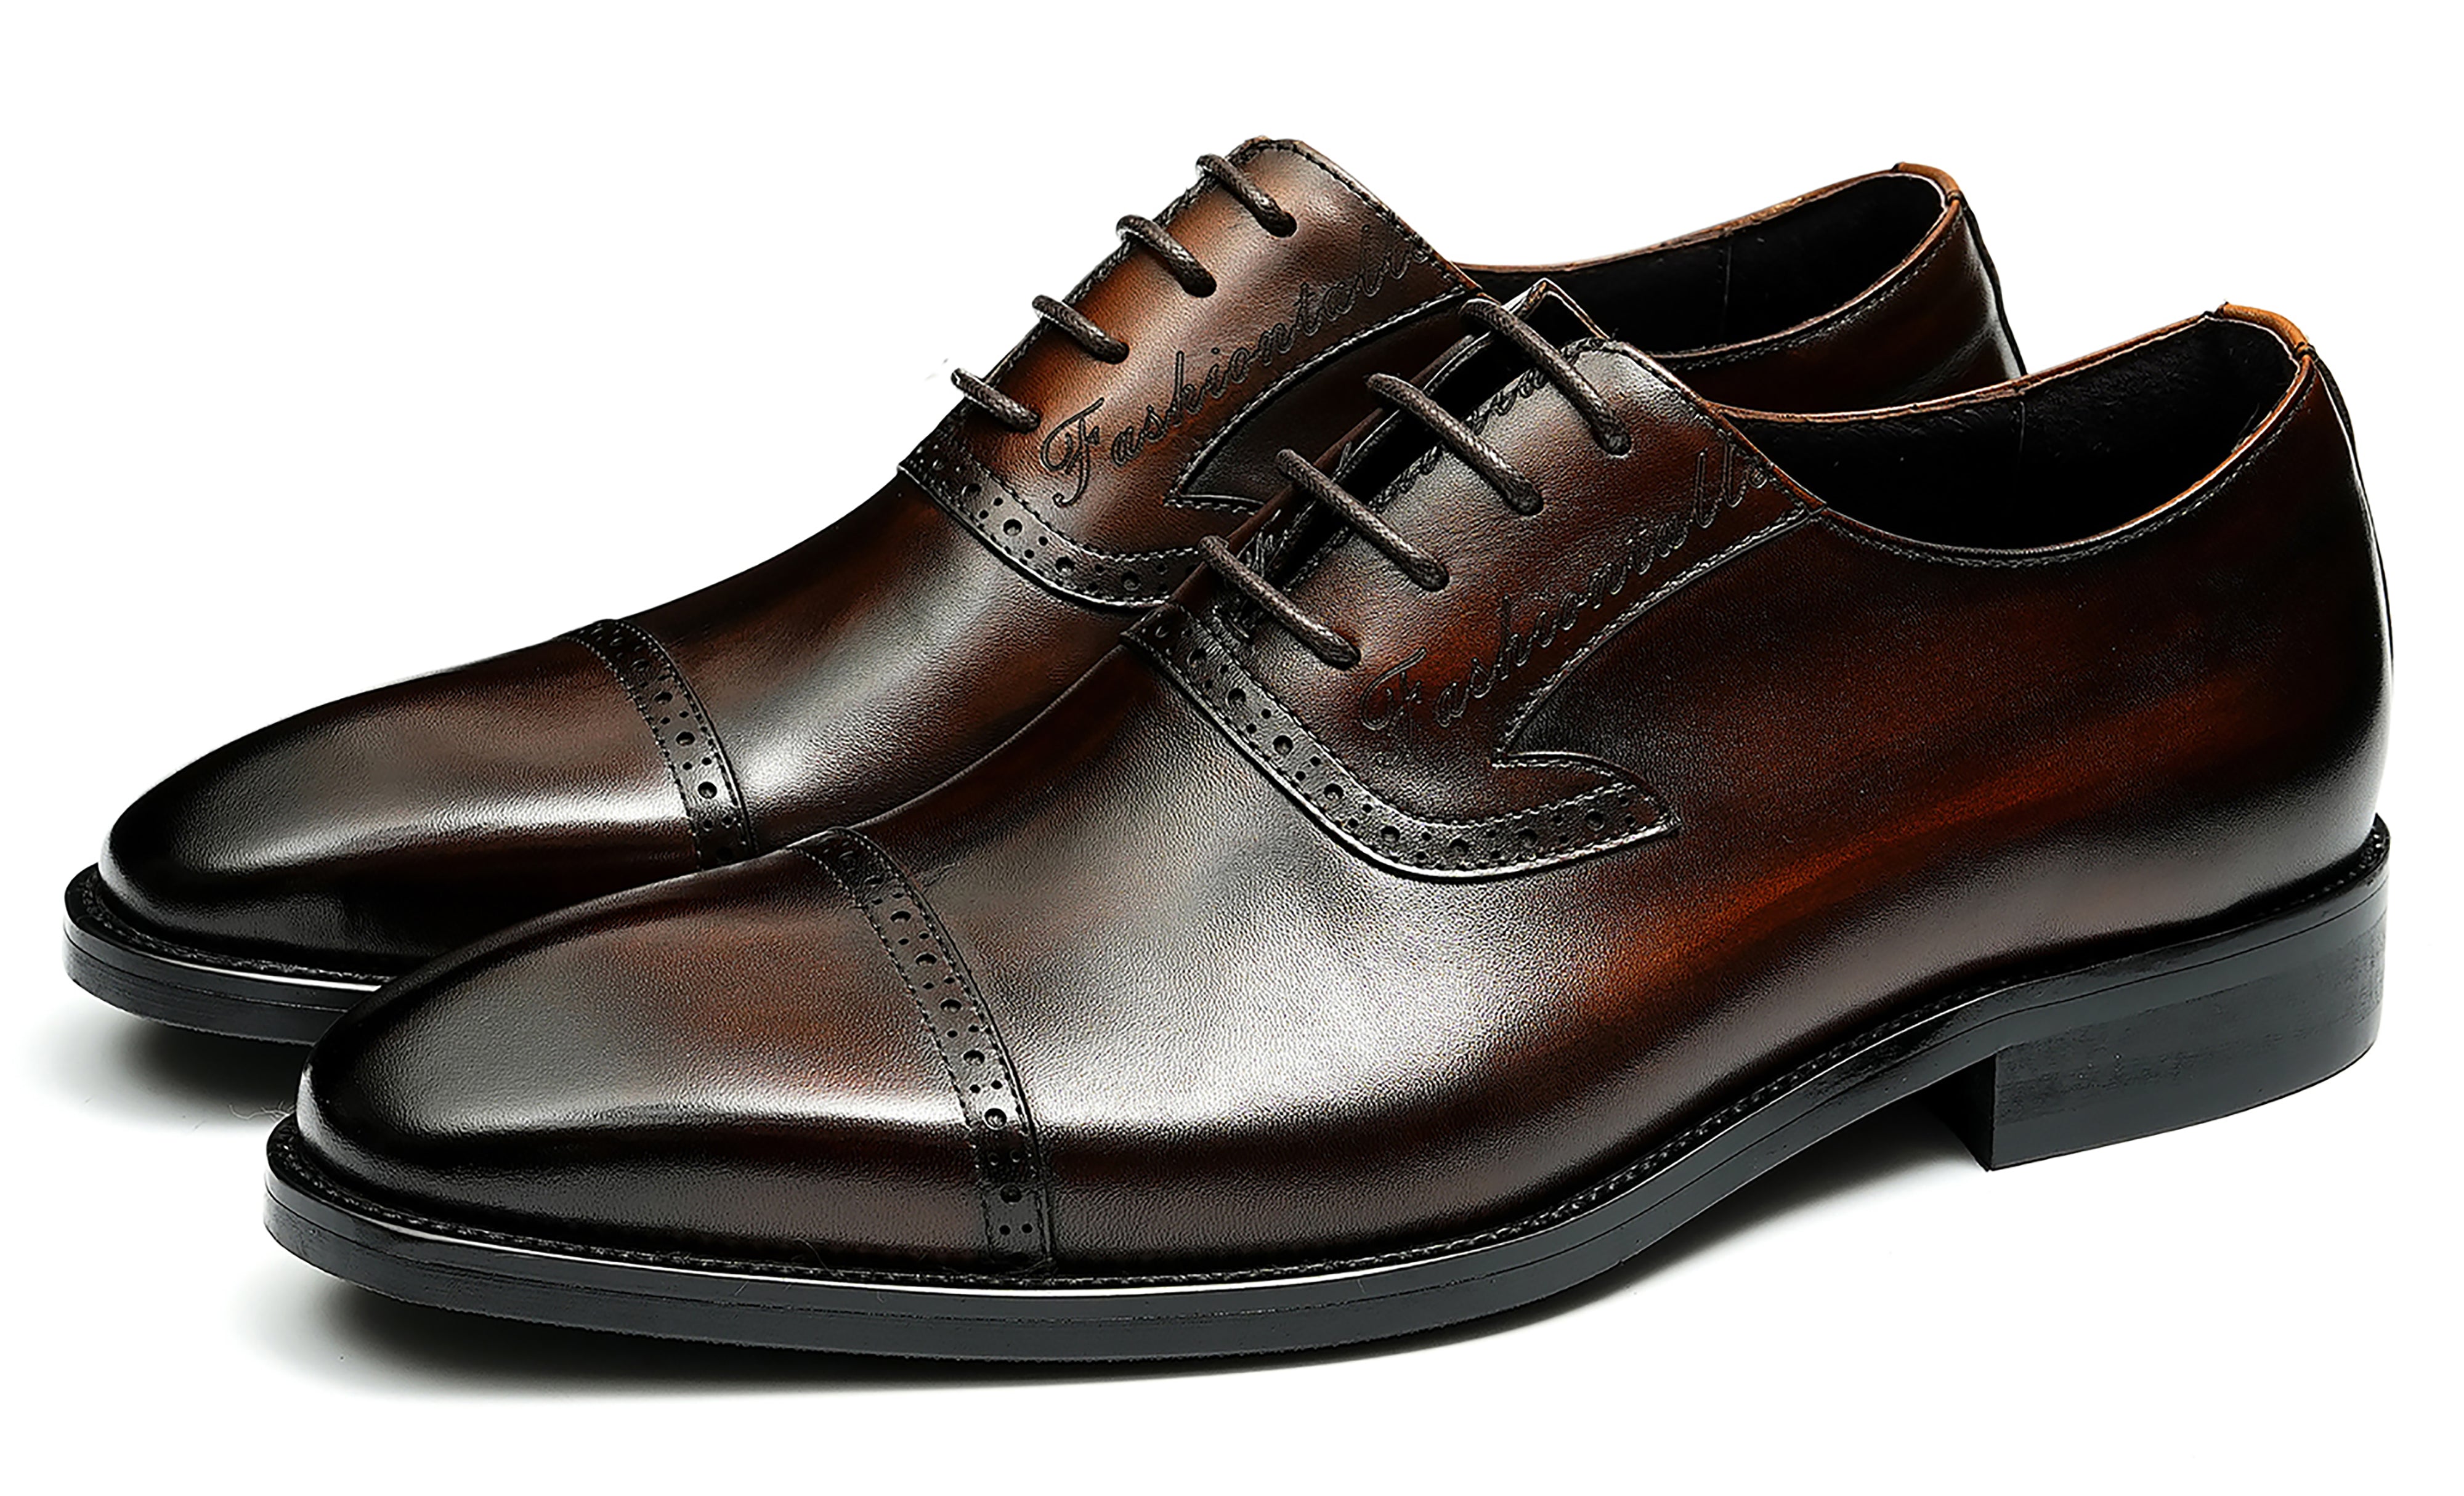 Men's Dress Formal Brogues Oxfords Shoes